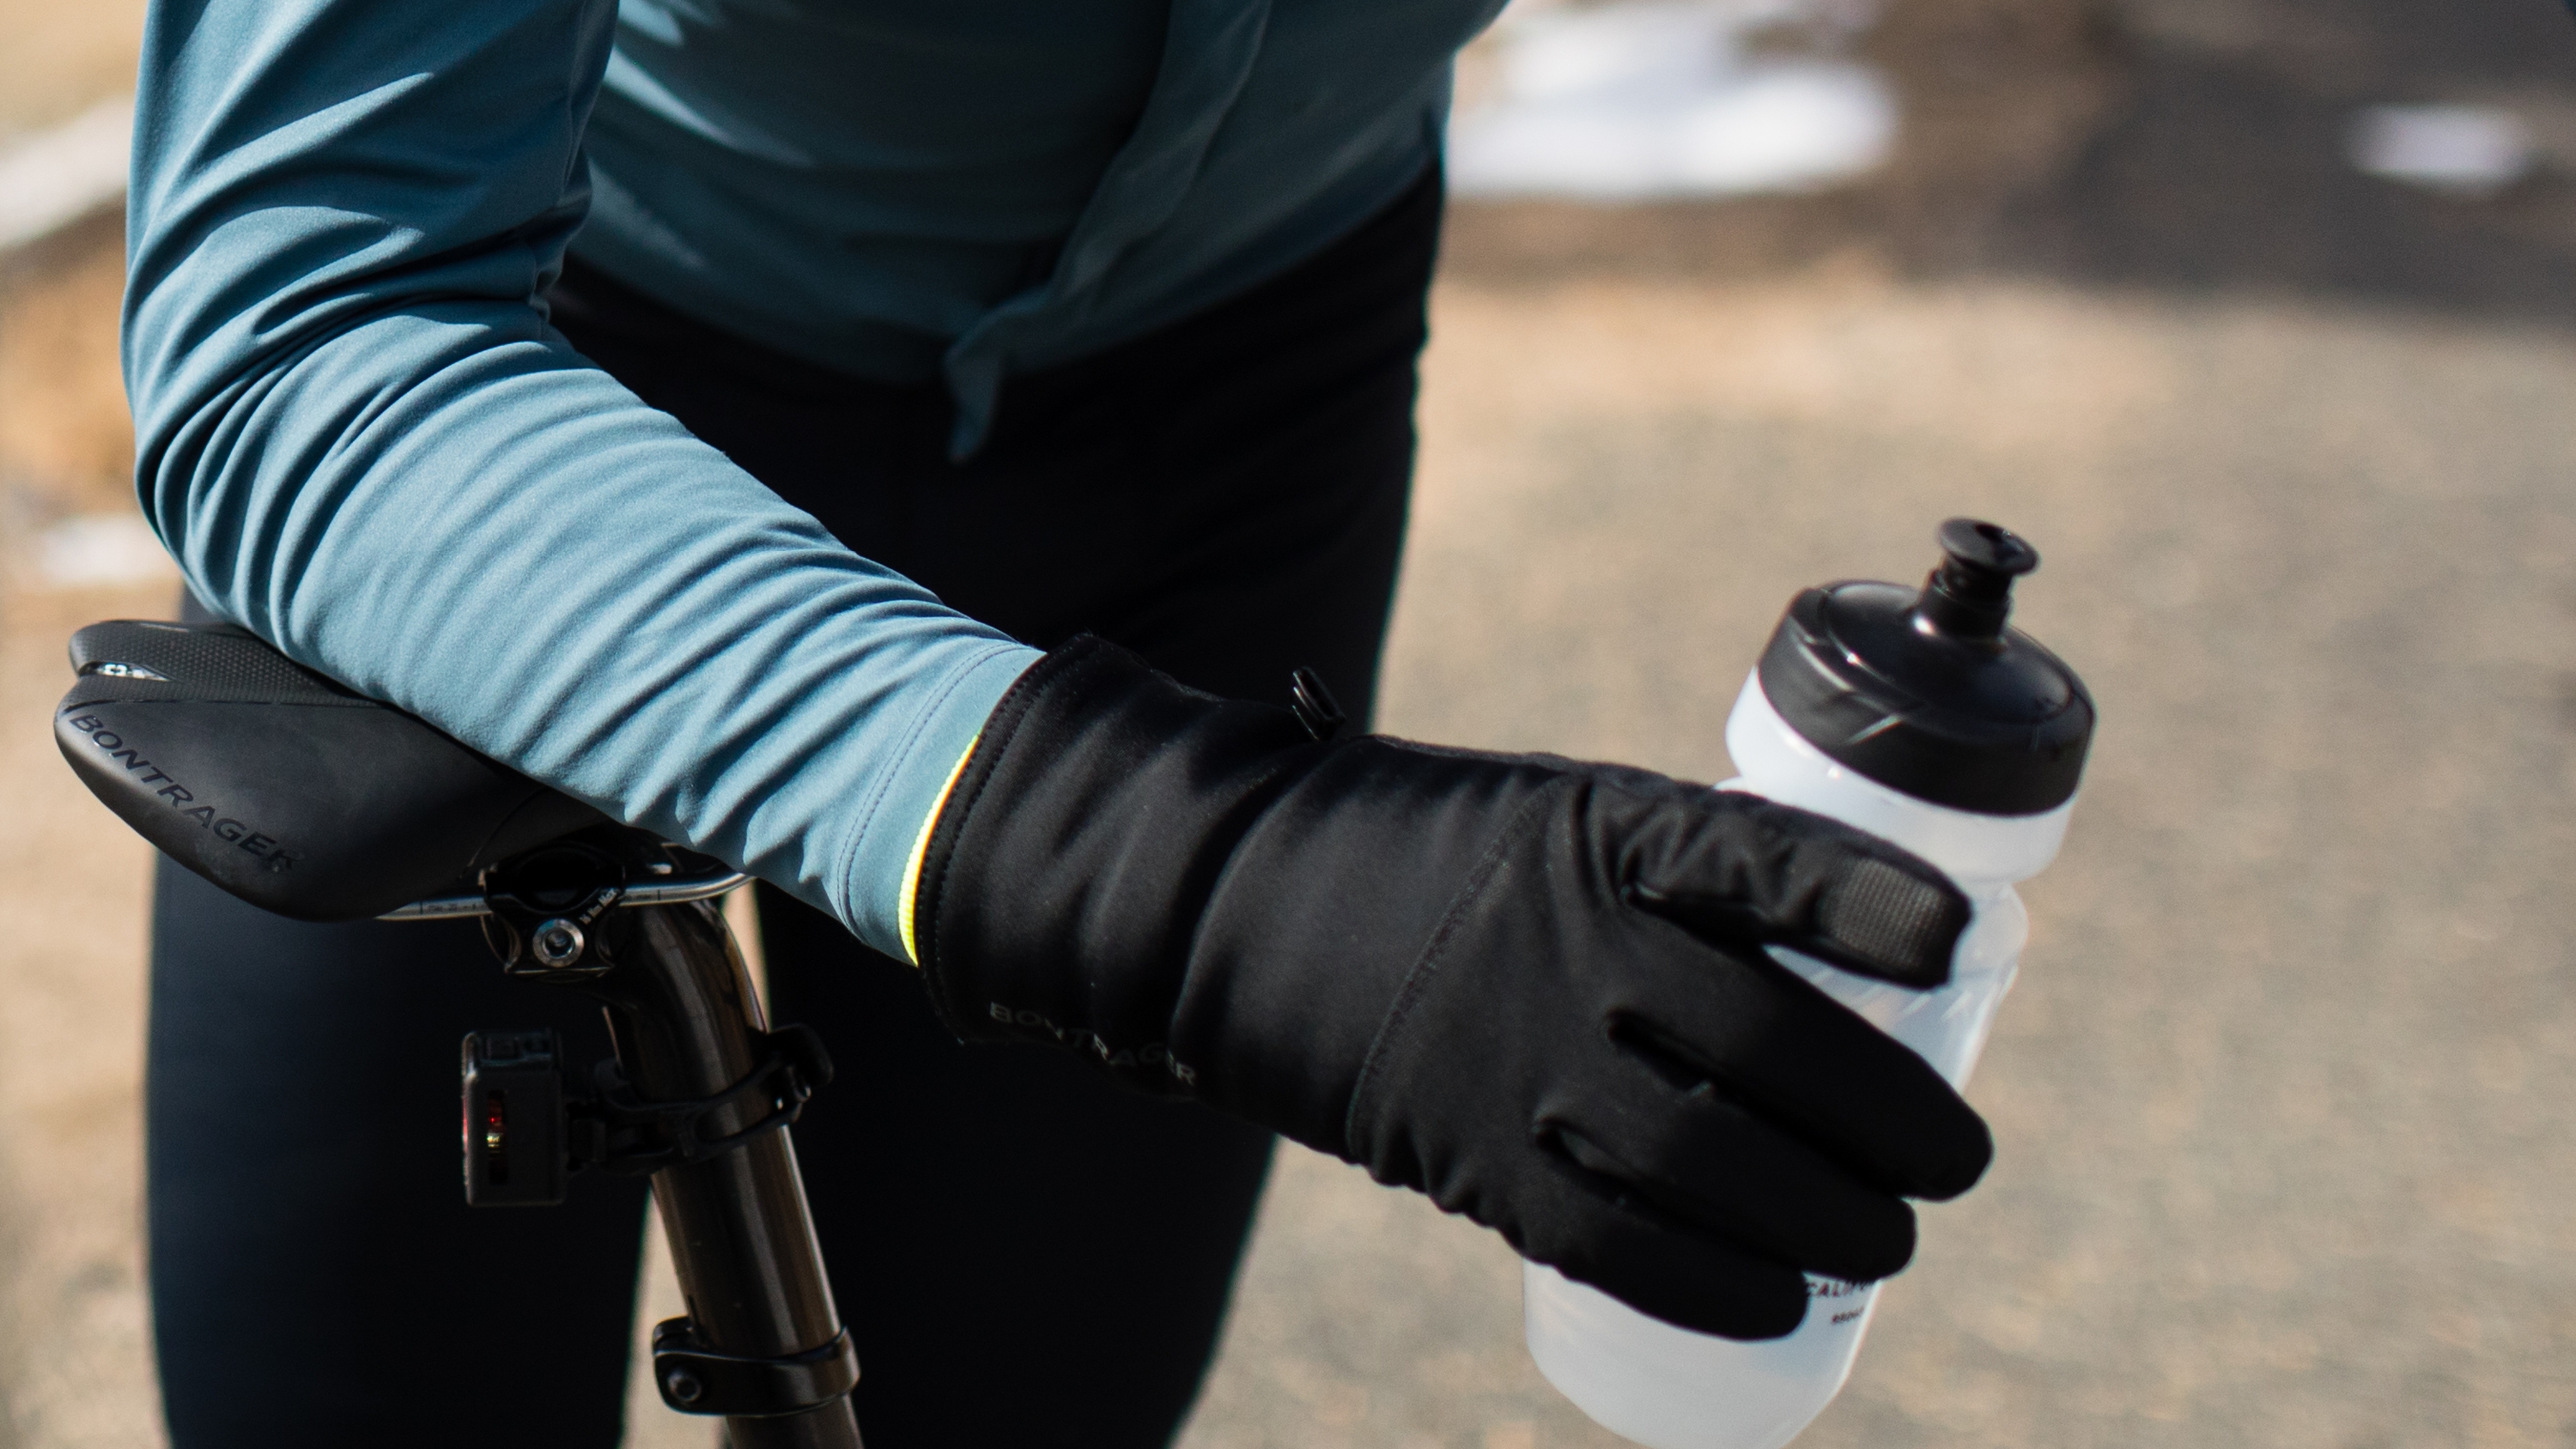 warm gloves for bike riding